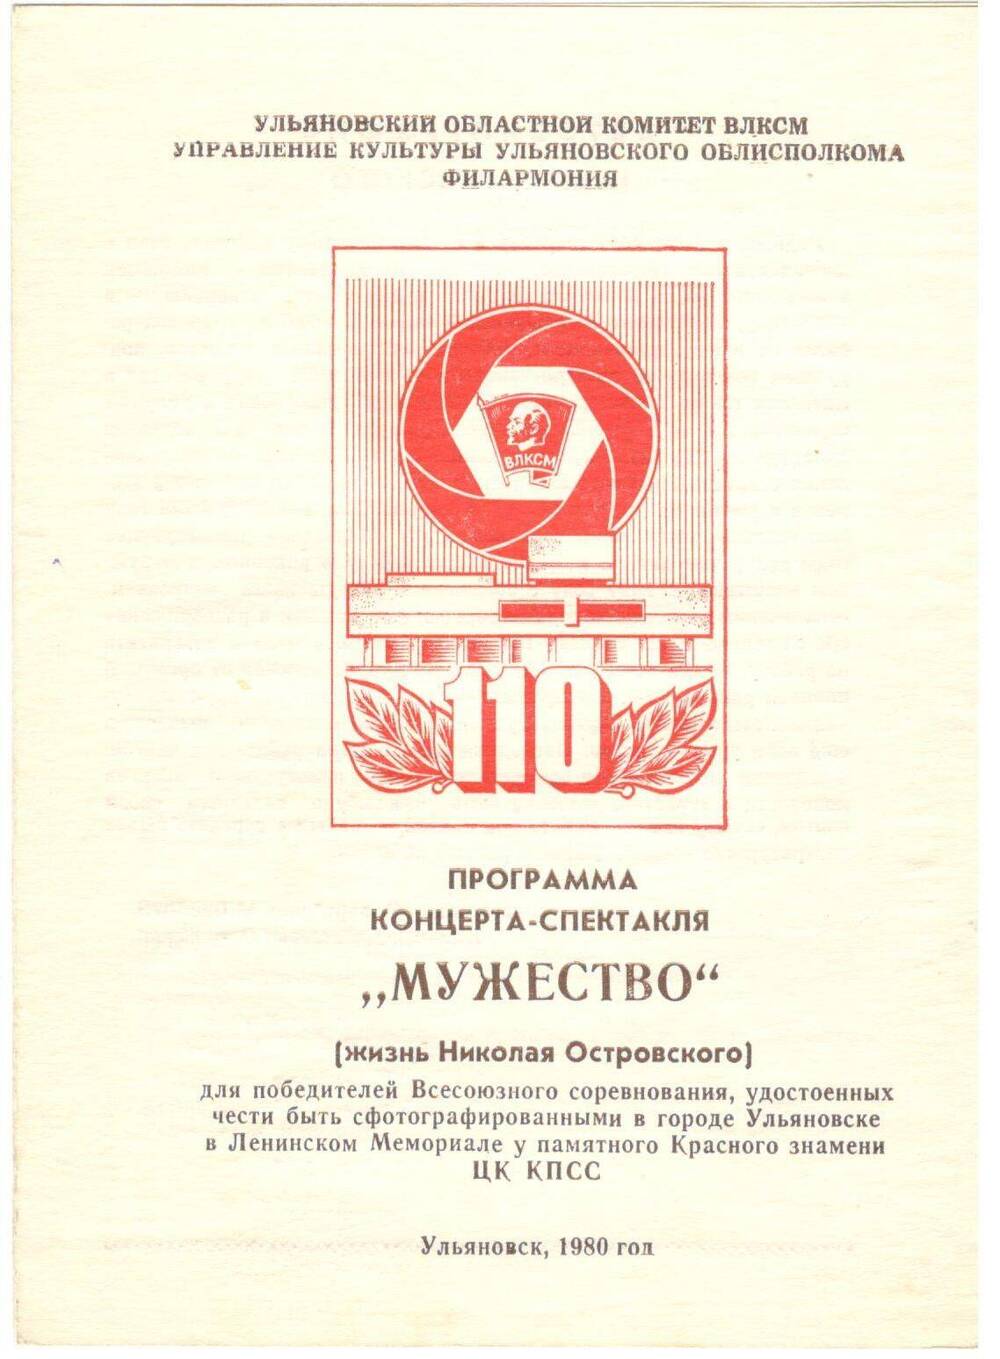 Программа концерта-спектакля Мужество, г. Ульяновск, 1980 г.